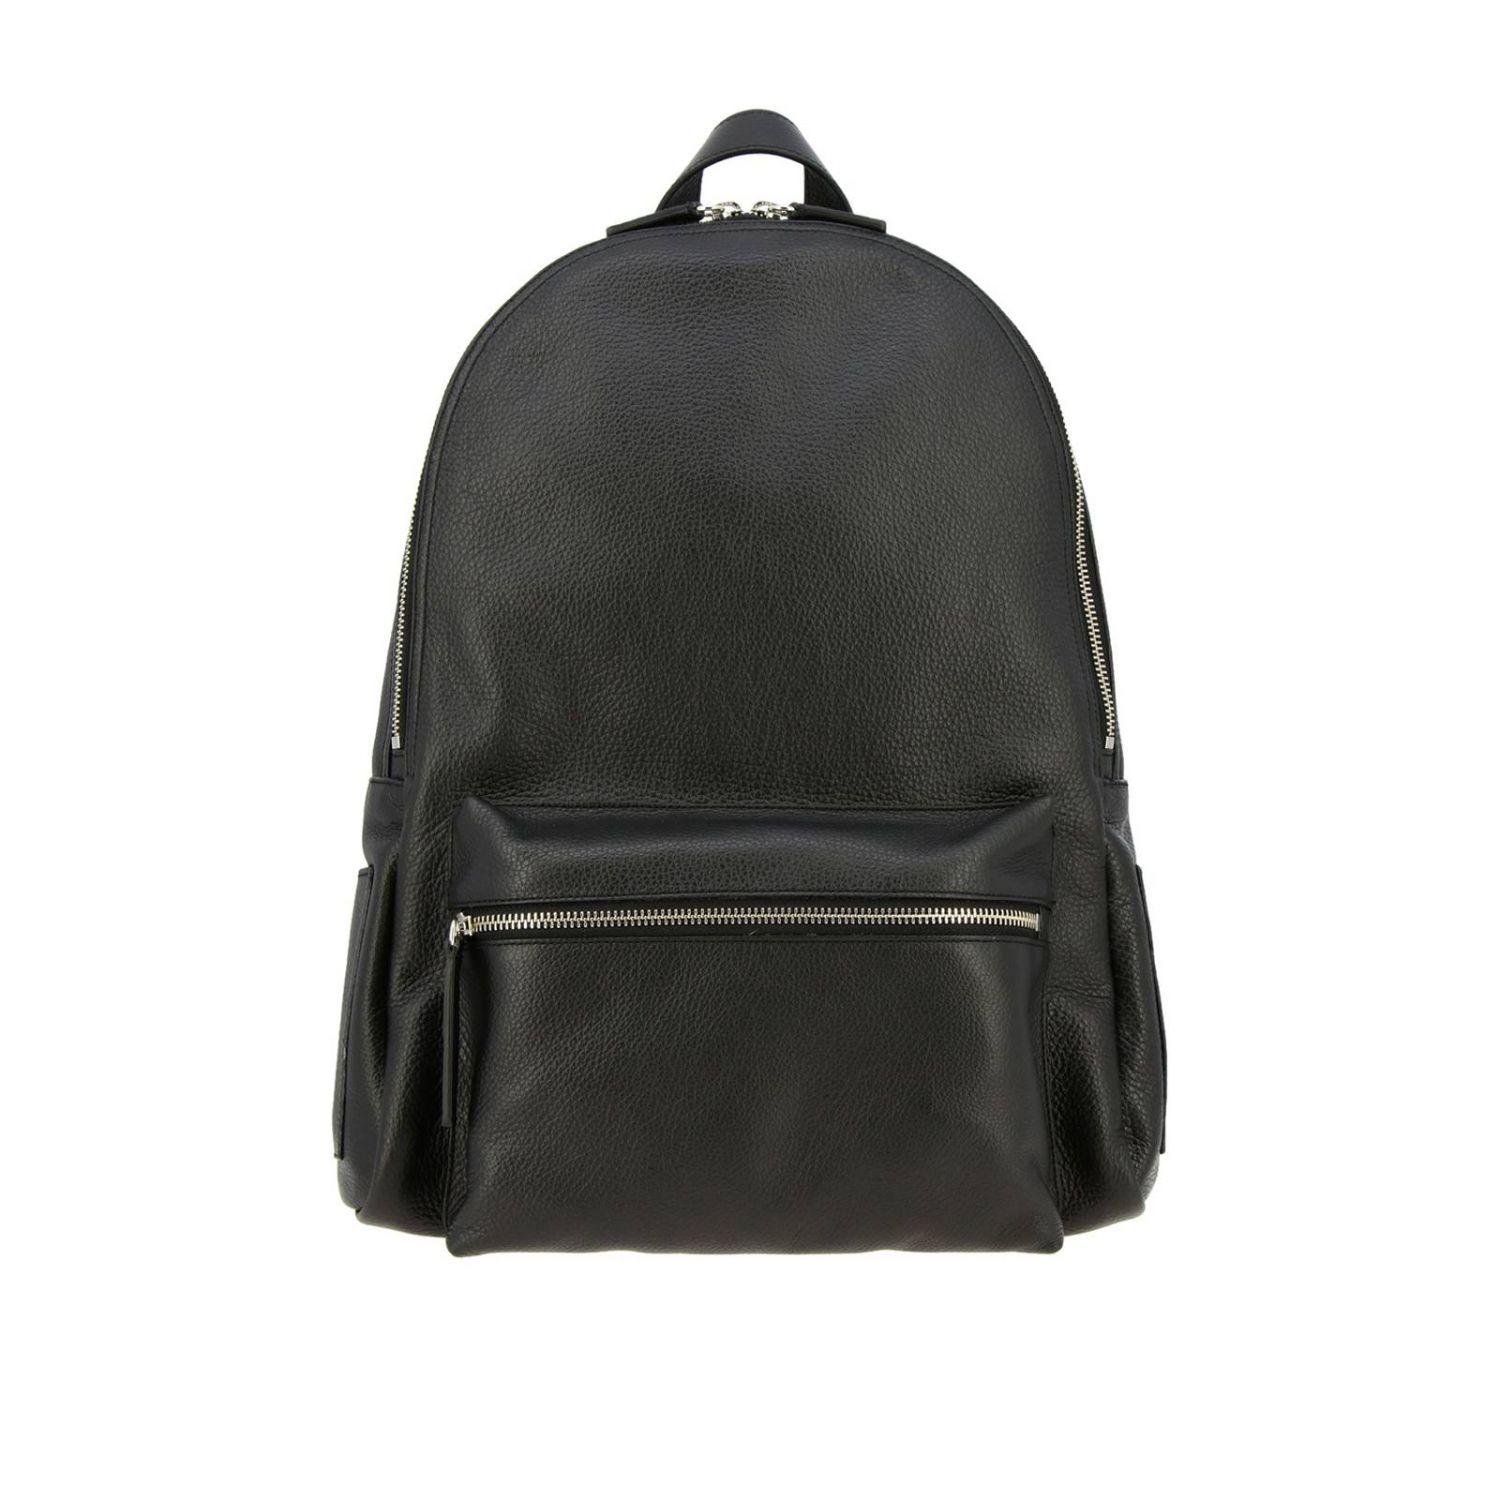 Orciani Outlet: Backpack men - Black | Backpack Orciani P00365 MIC ...